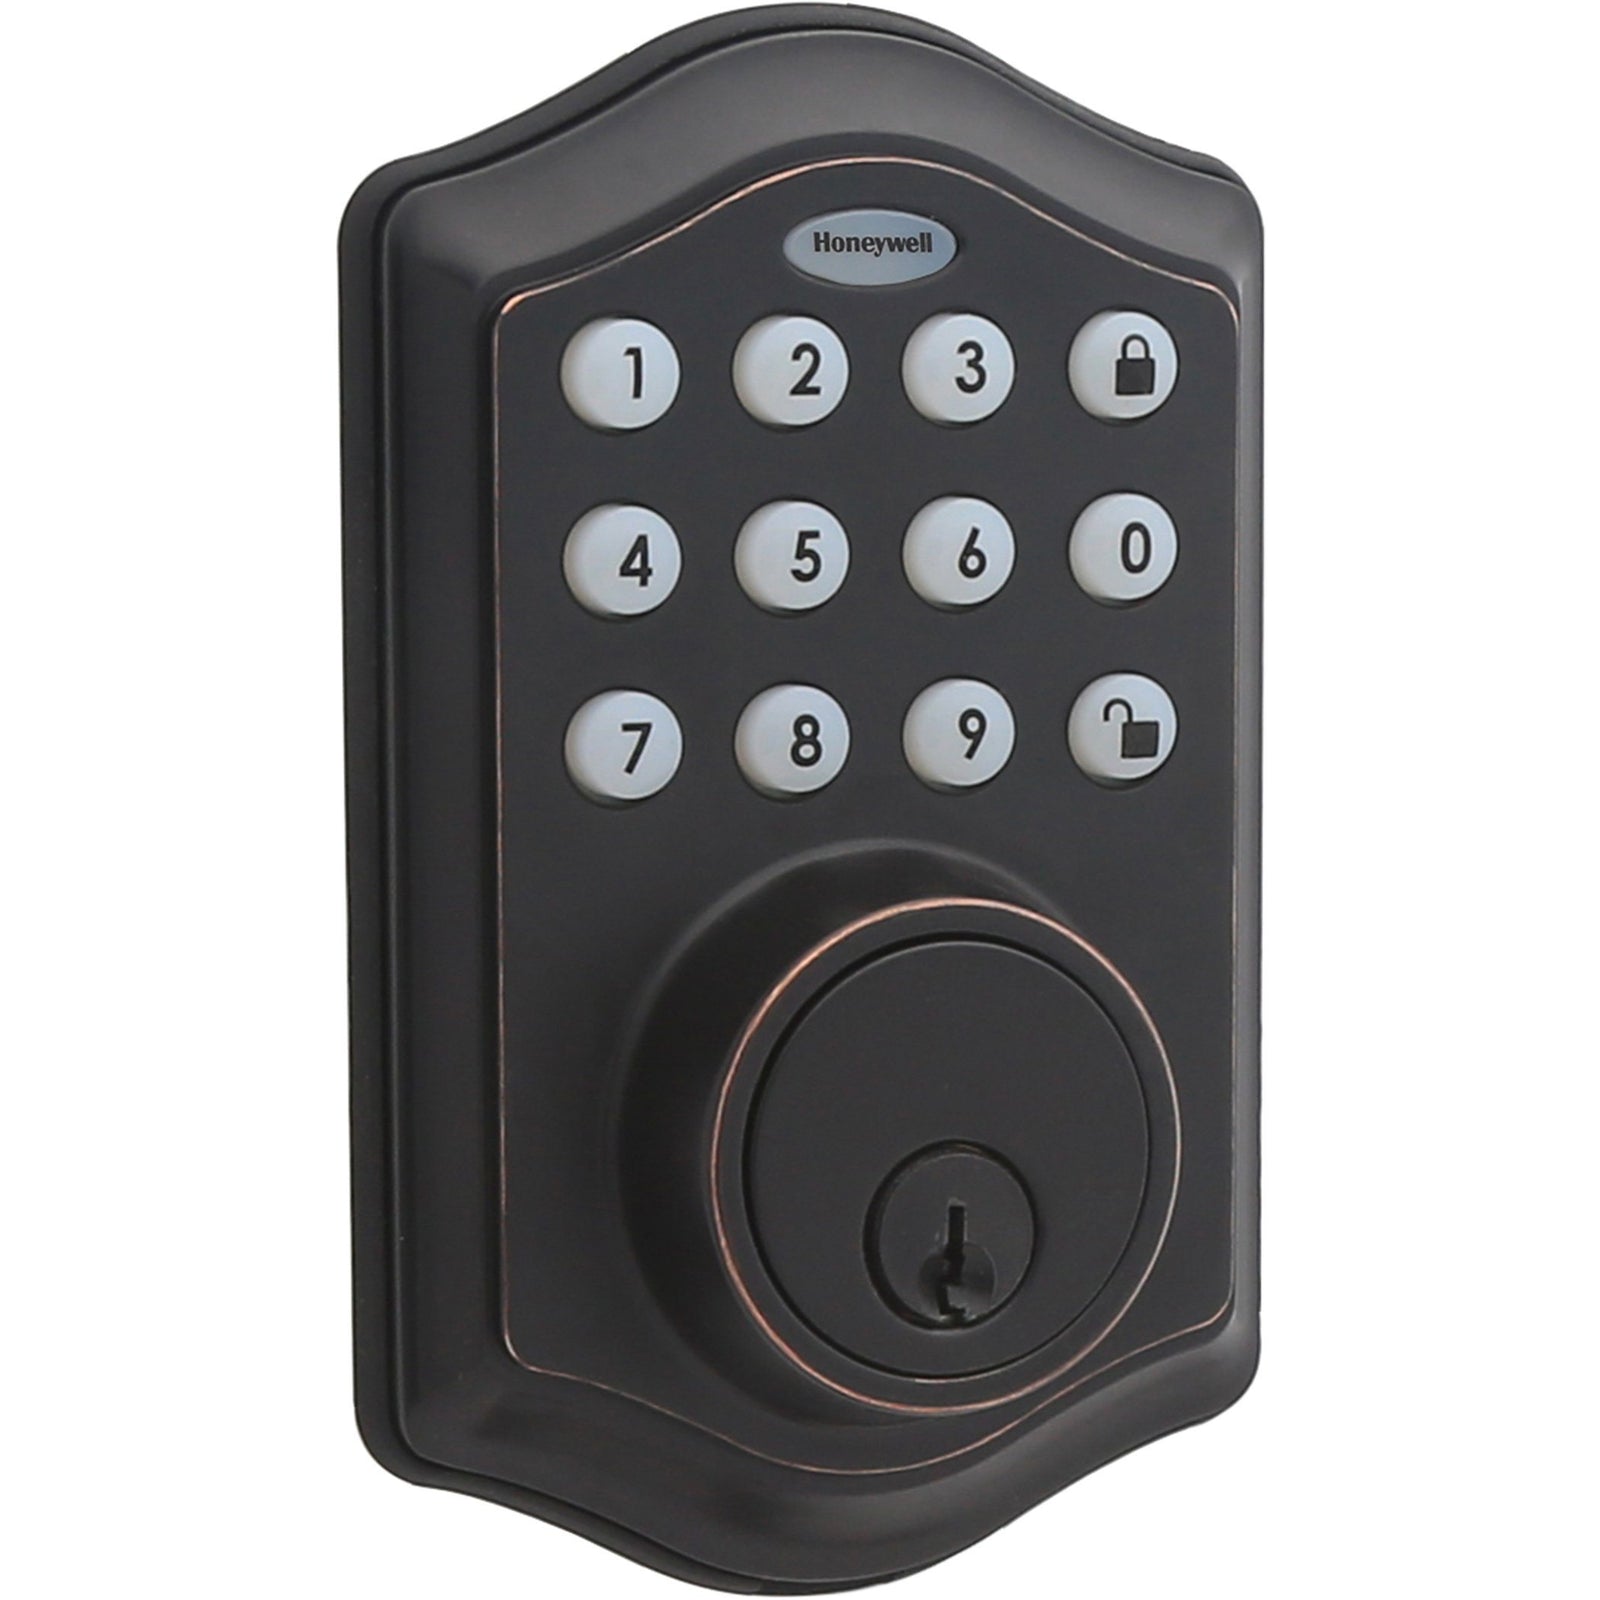 Honeywell 8712409 Electronic Deadbolt Door Lock with Keypad in Oil Rubbed Bronze